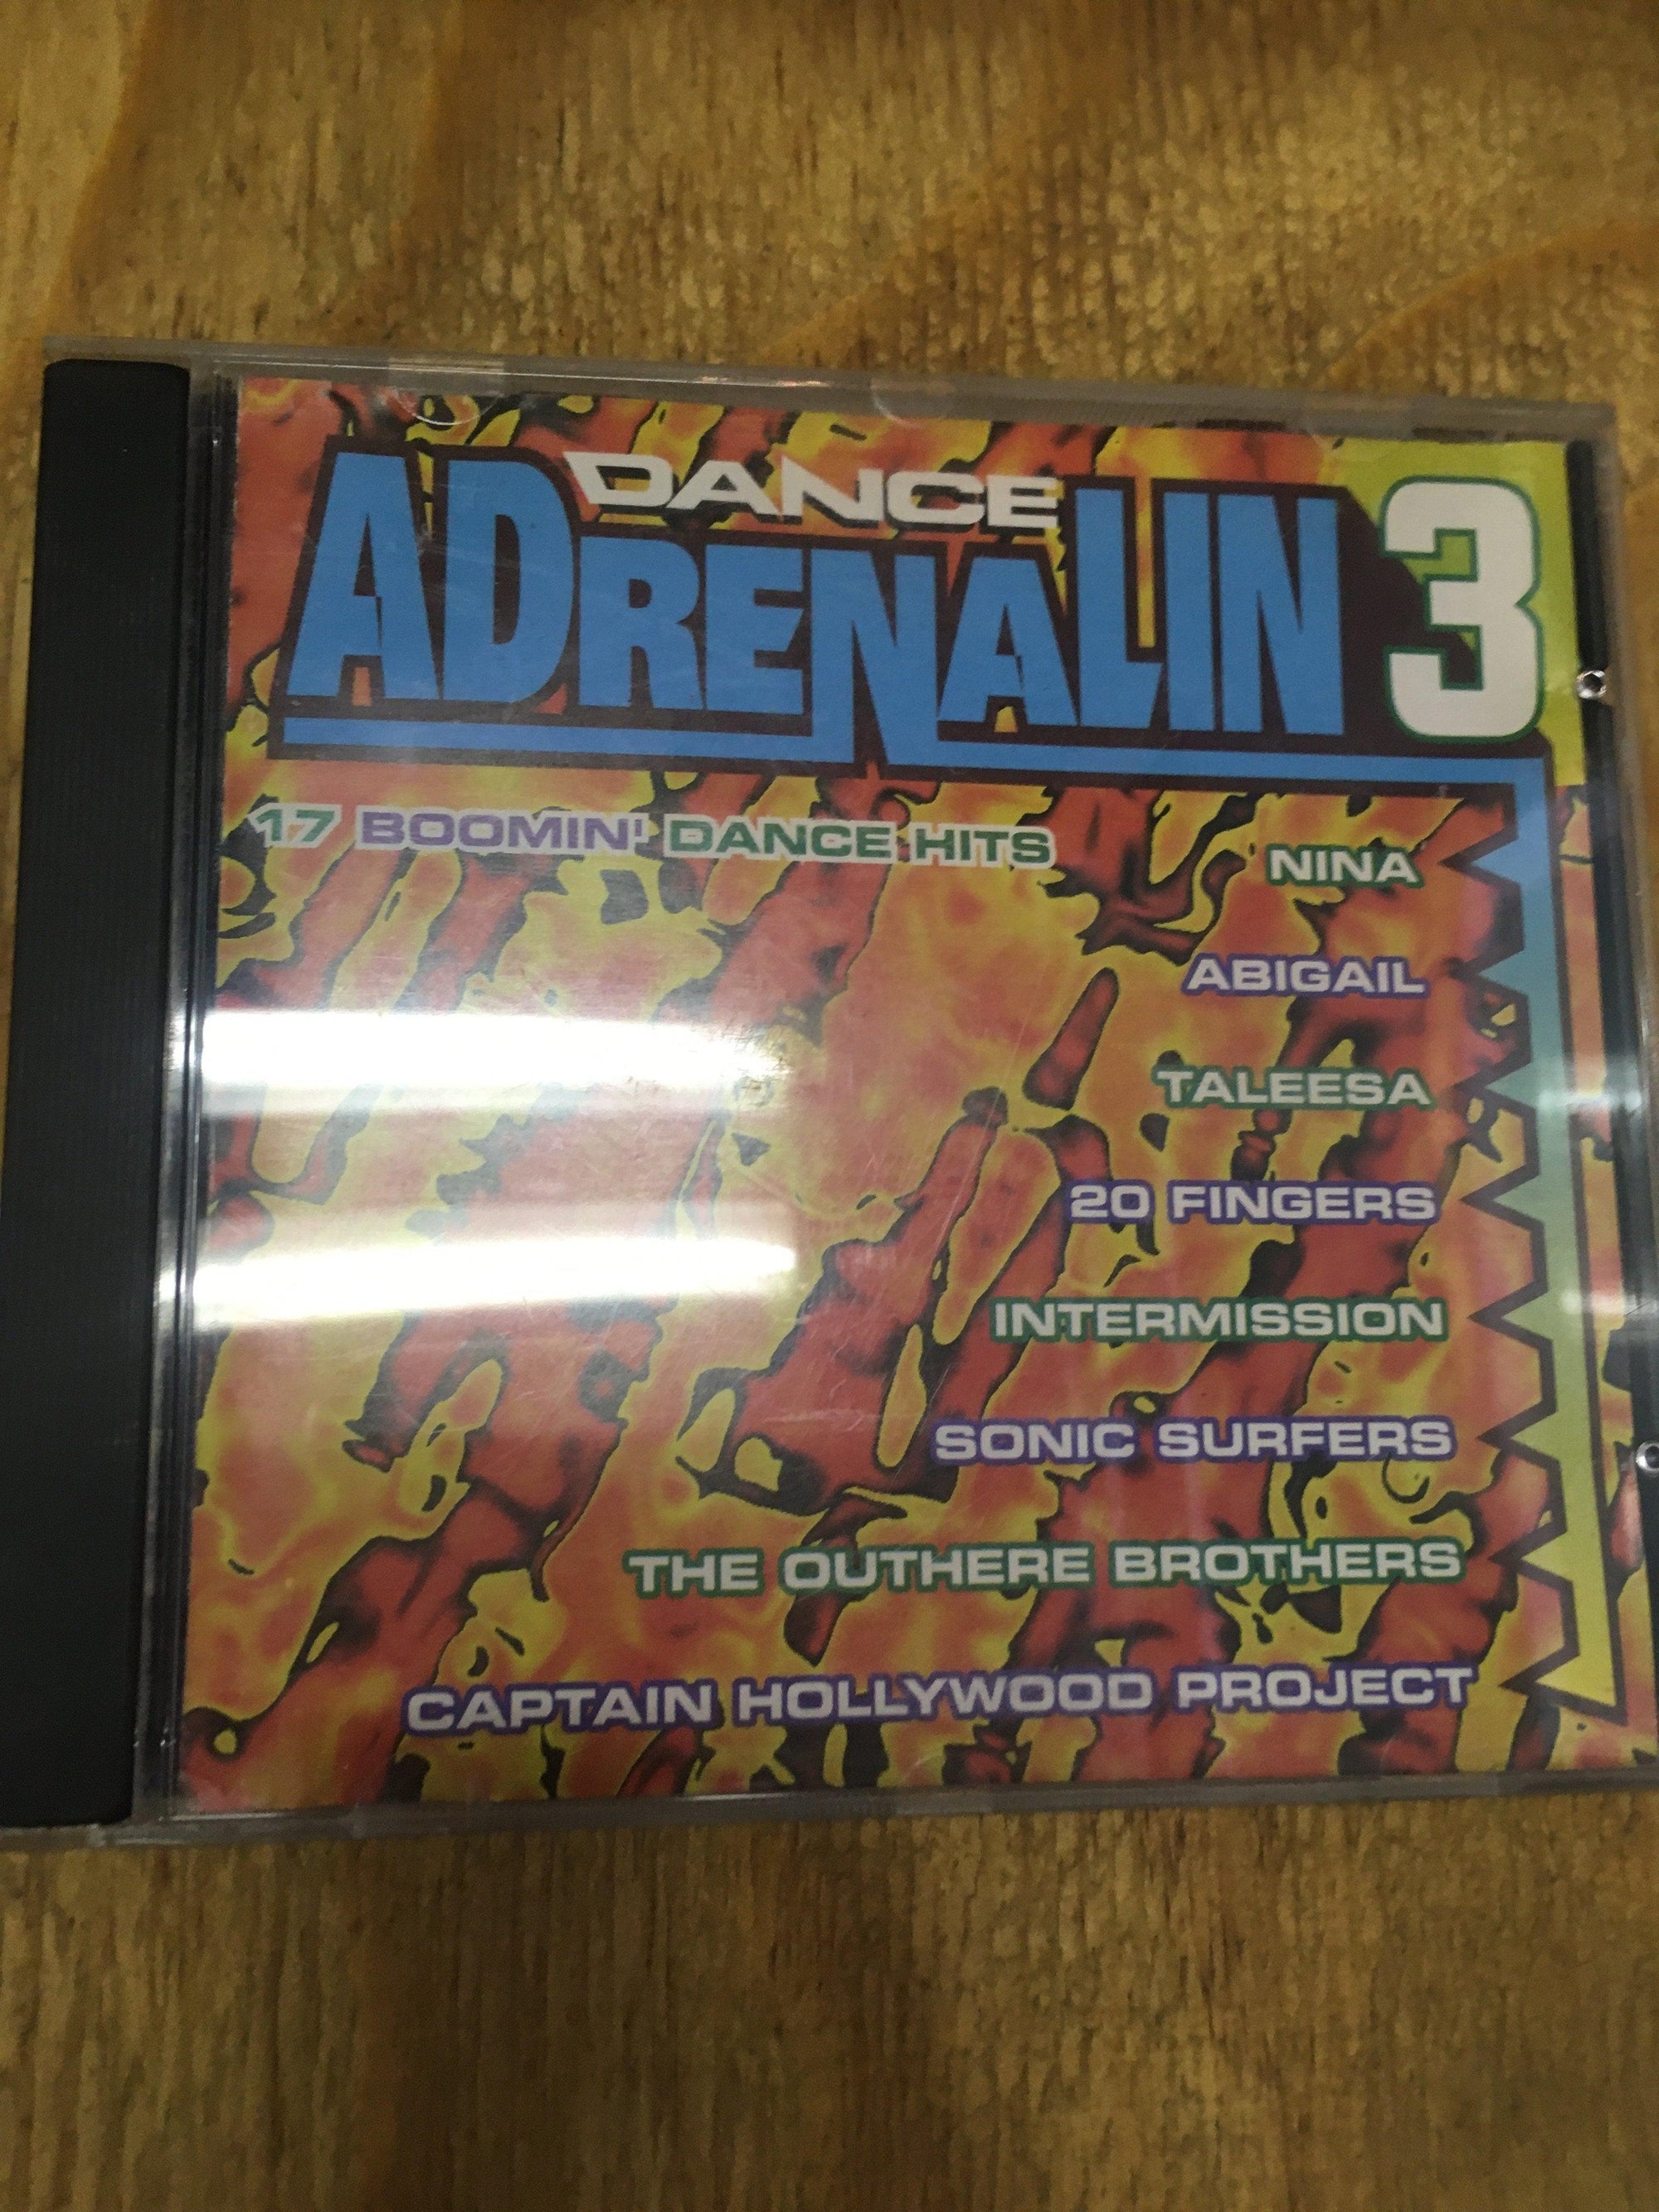 Dance Adrenaline 3 - CD - 2ndhandwarehouse.com